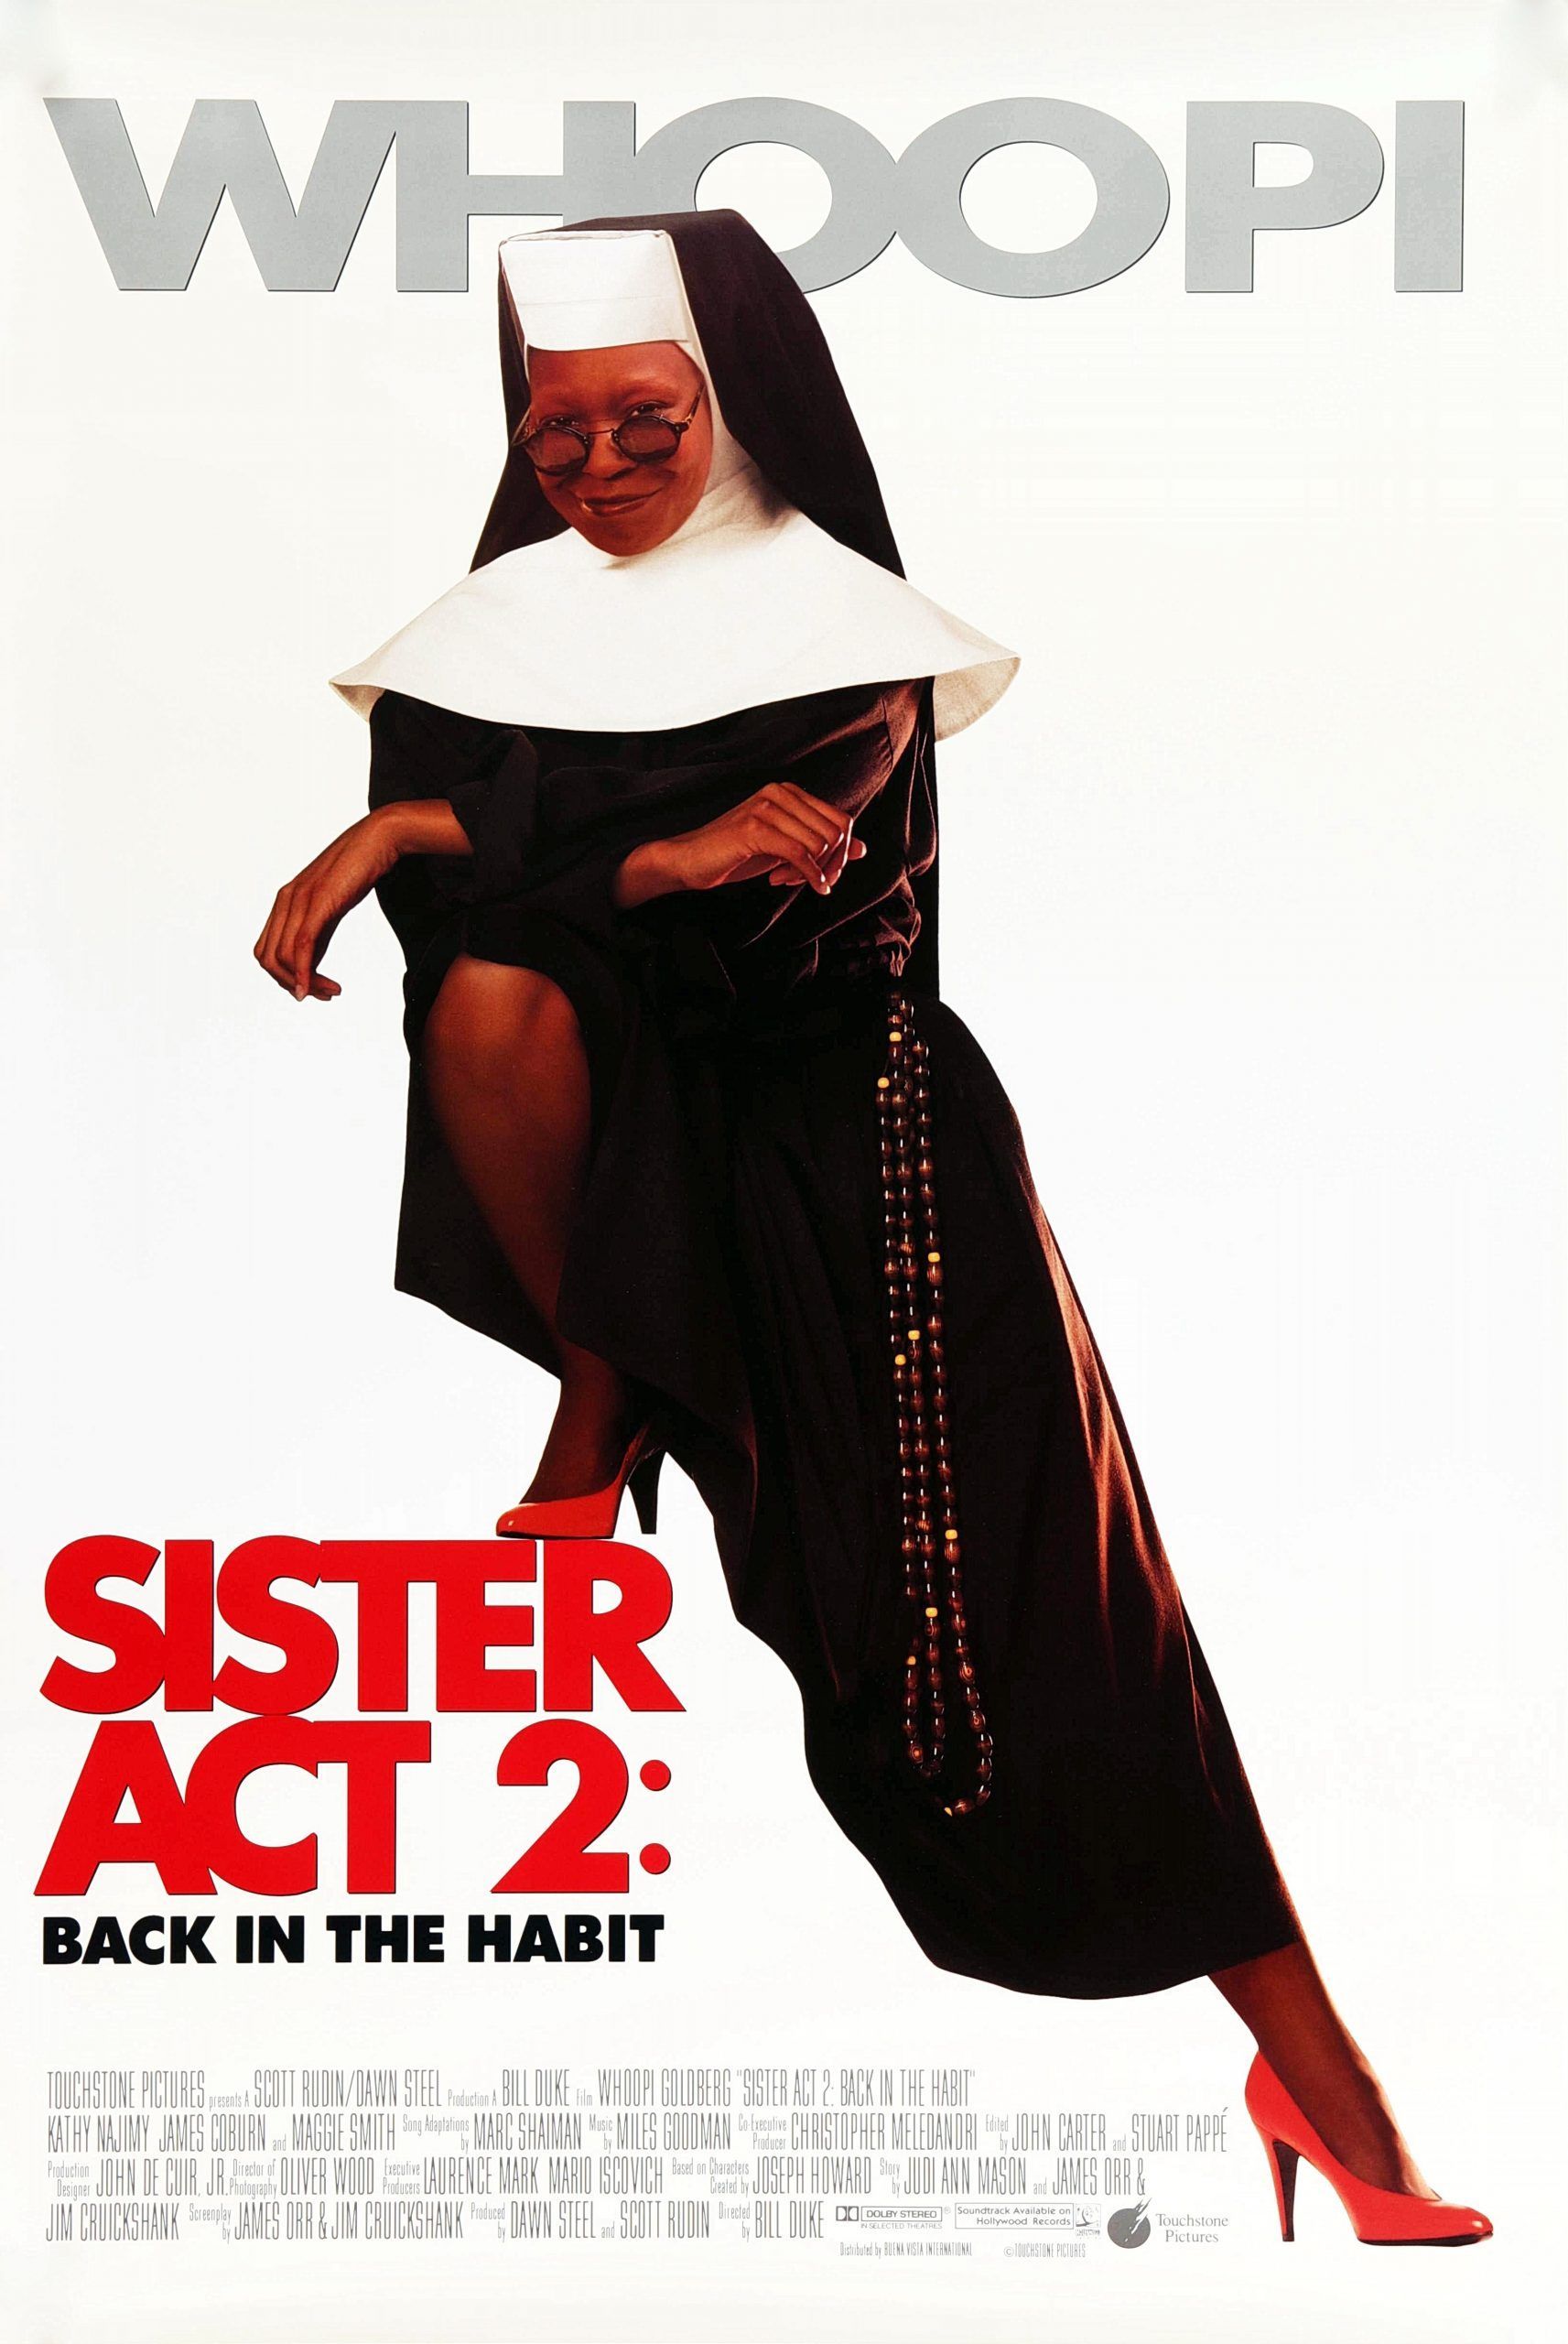 A Fresh Take on Black America: On “Sister Act 2”